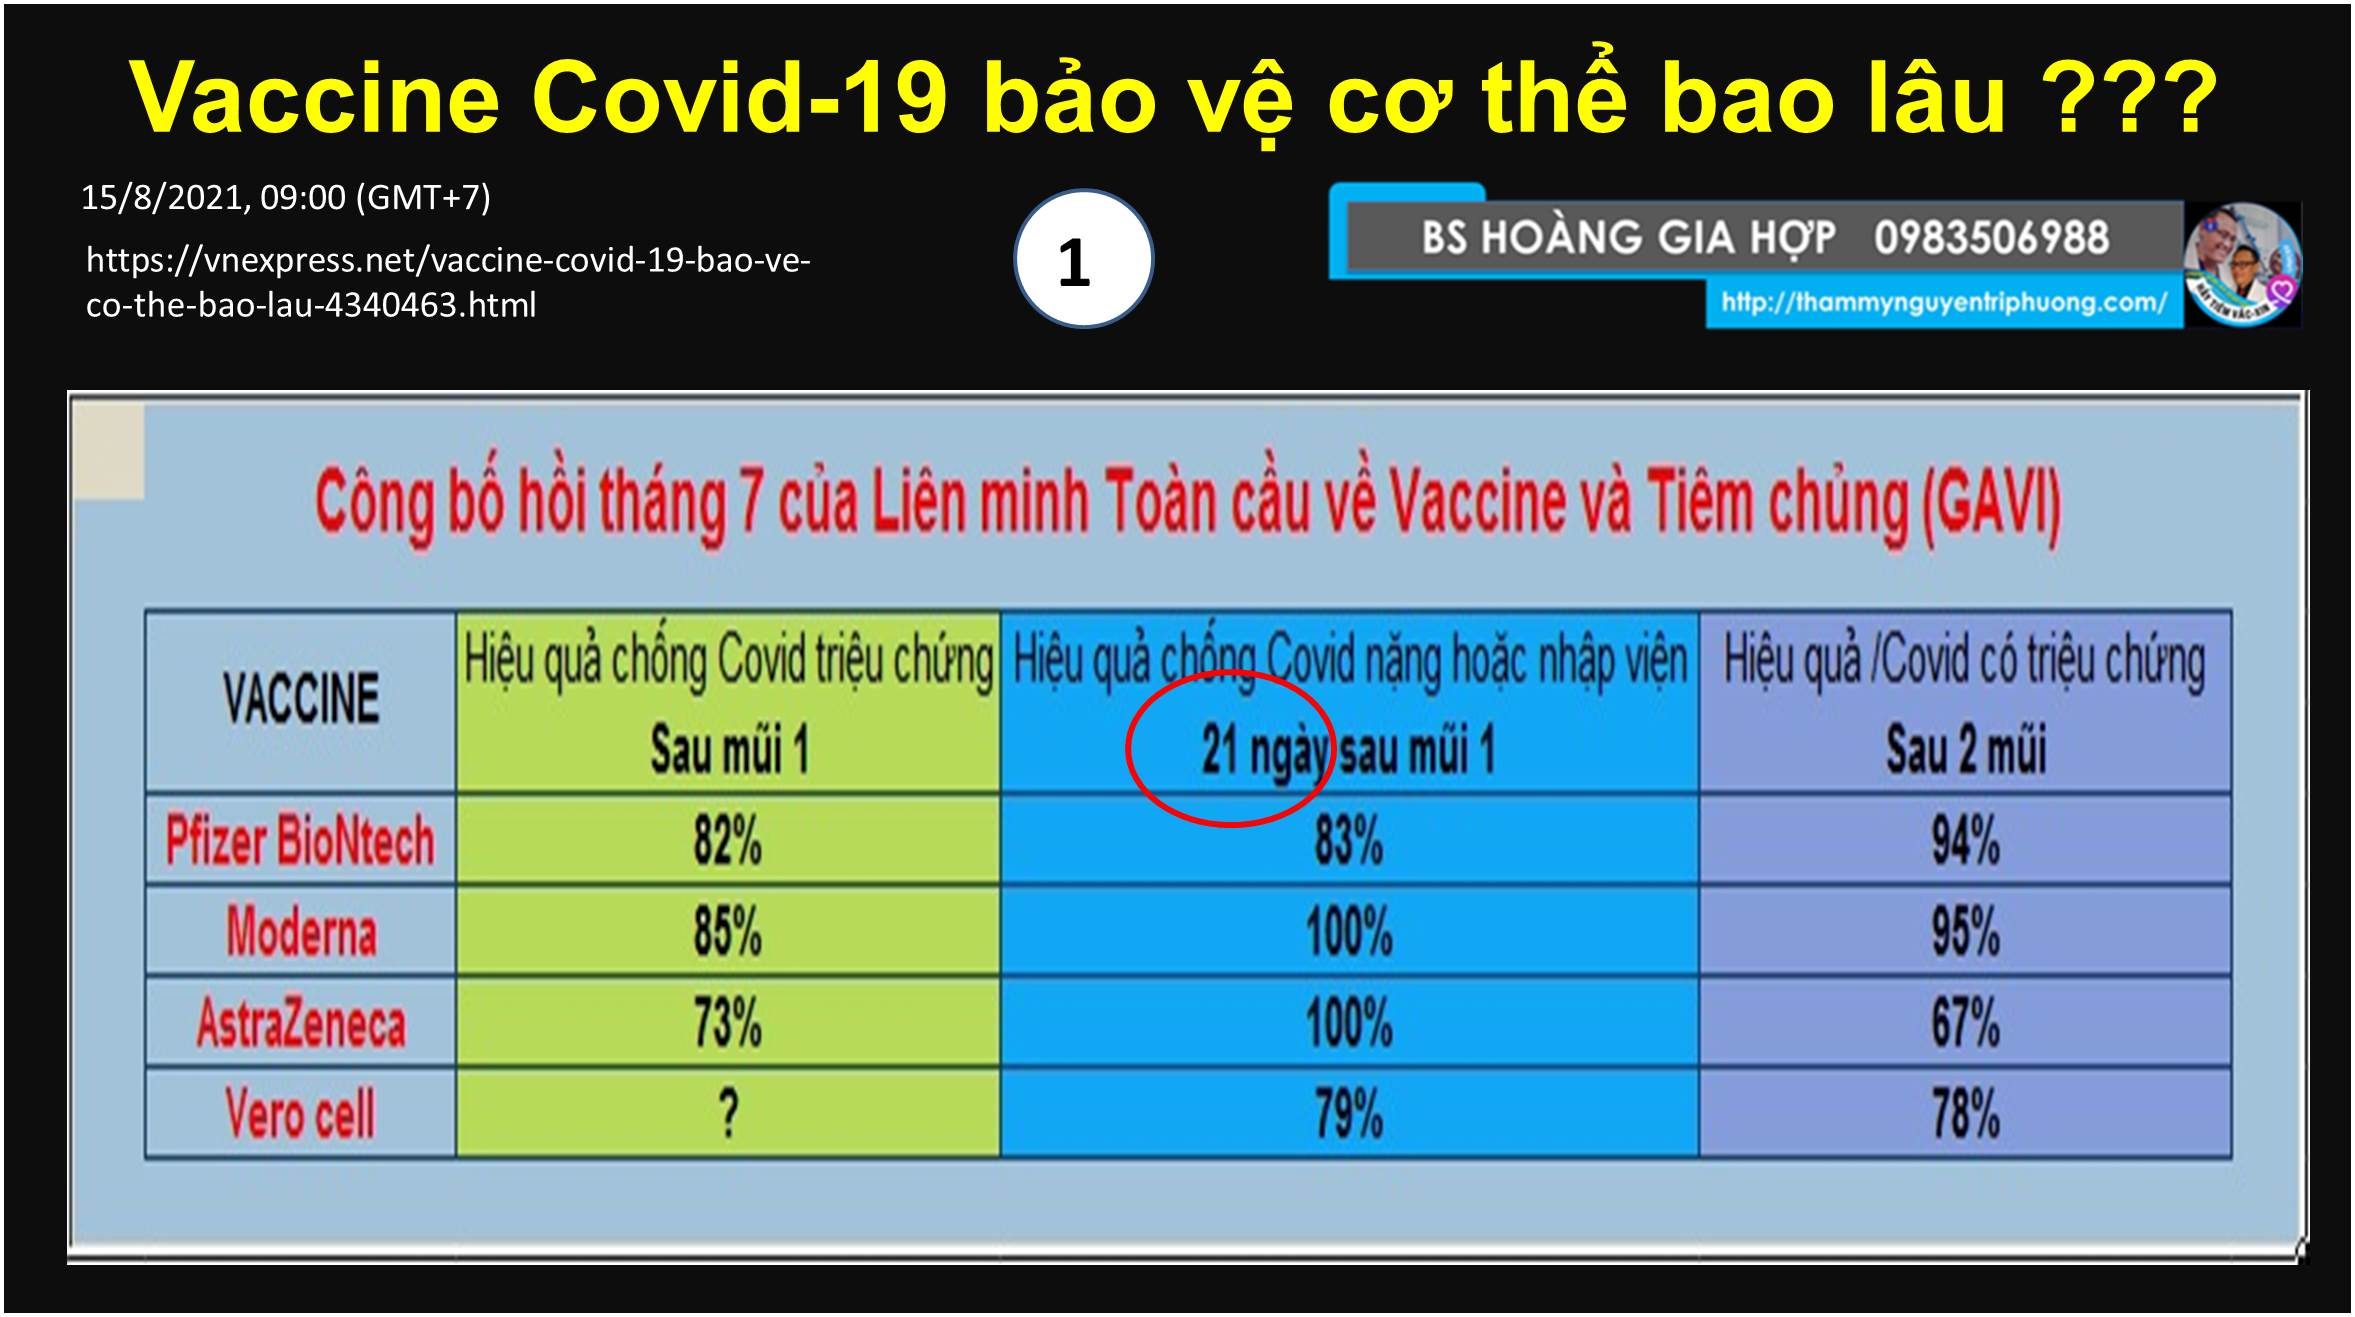 Vaccine Covid-19 bảo vệ cơ thể bao lâu ???